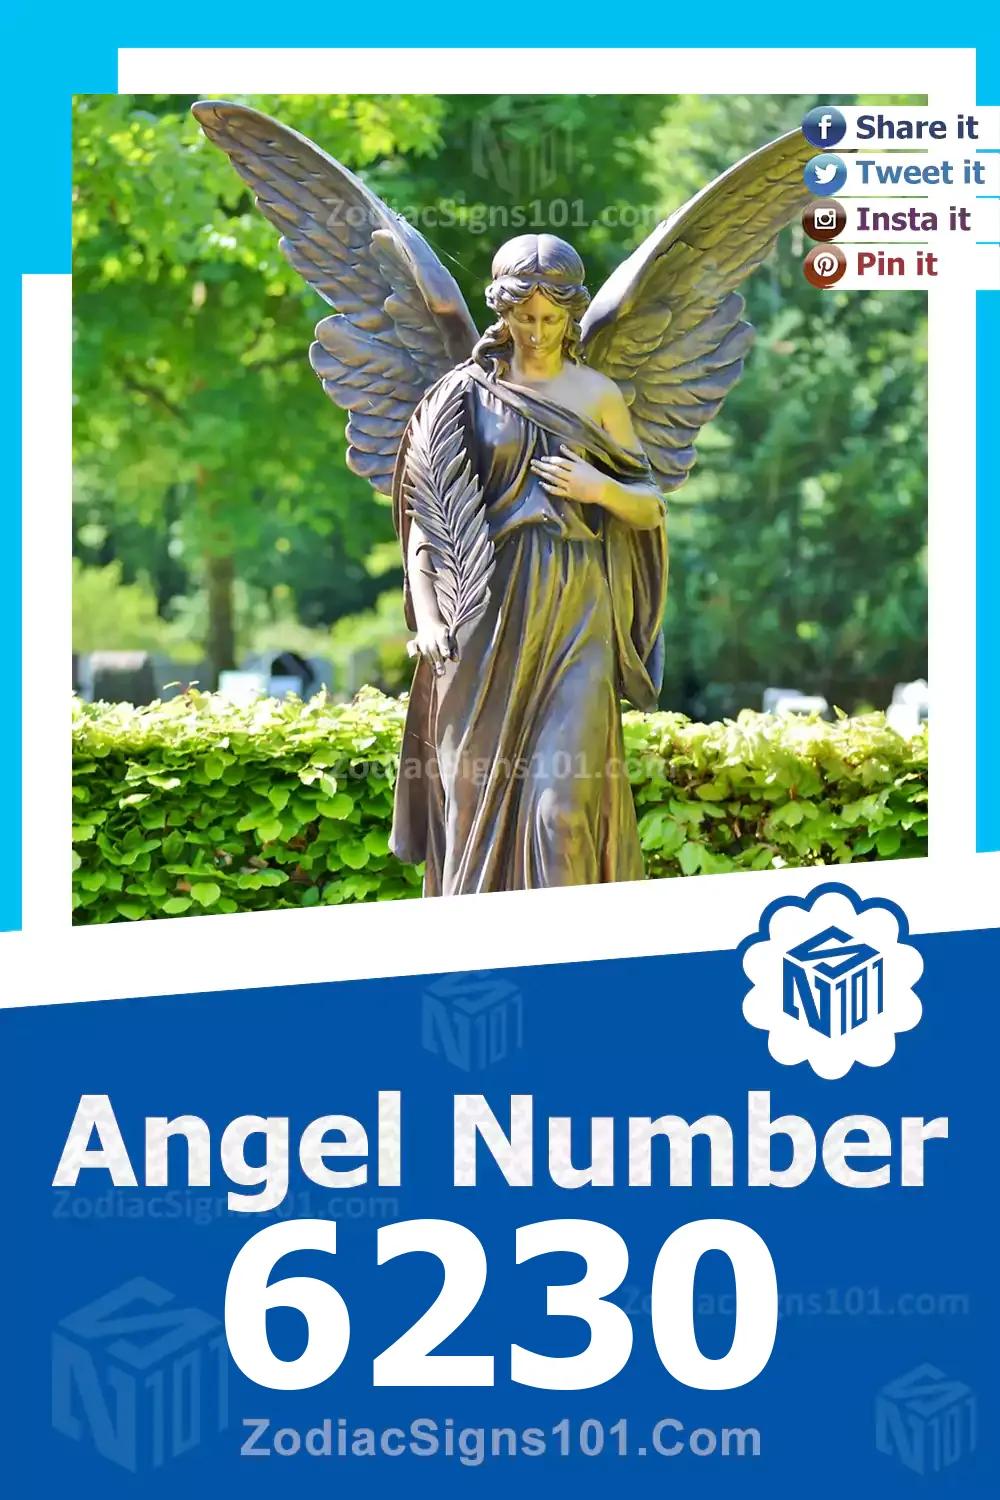 6230-Angel-Number-Meaning.jpg